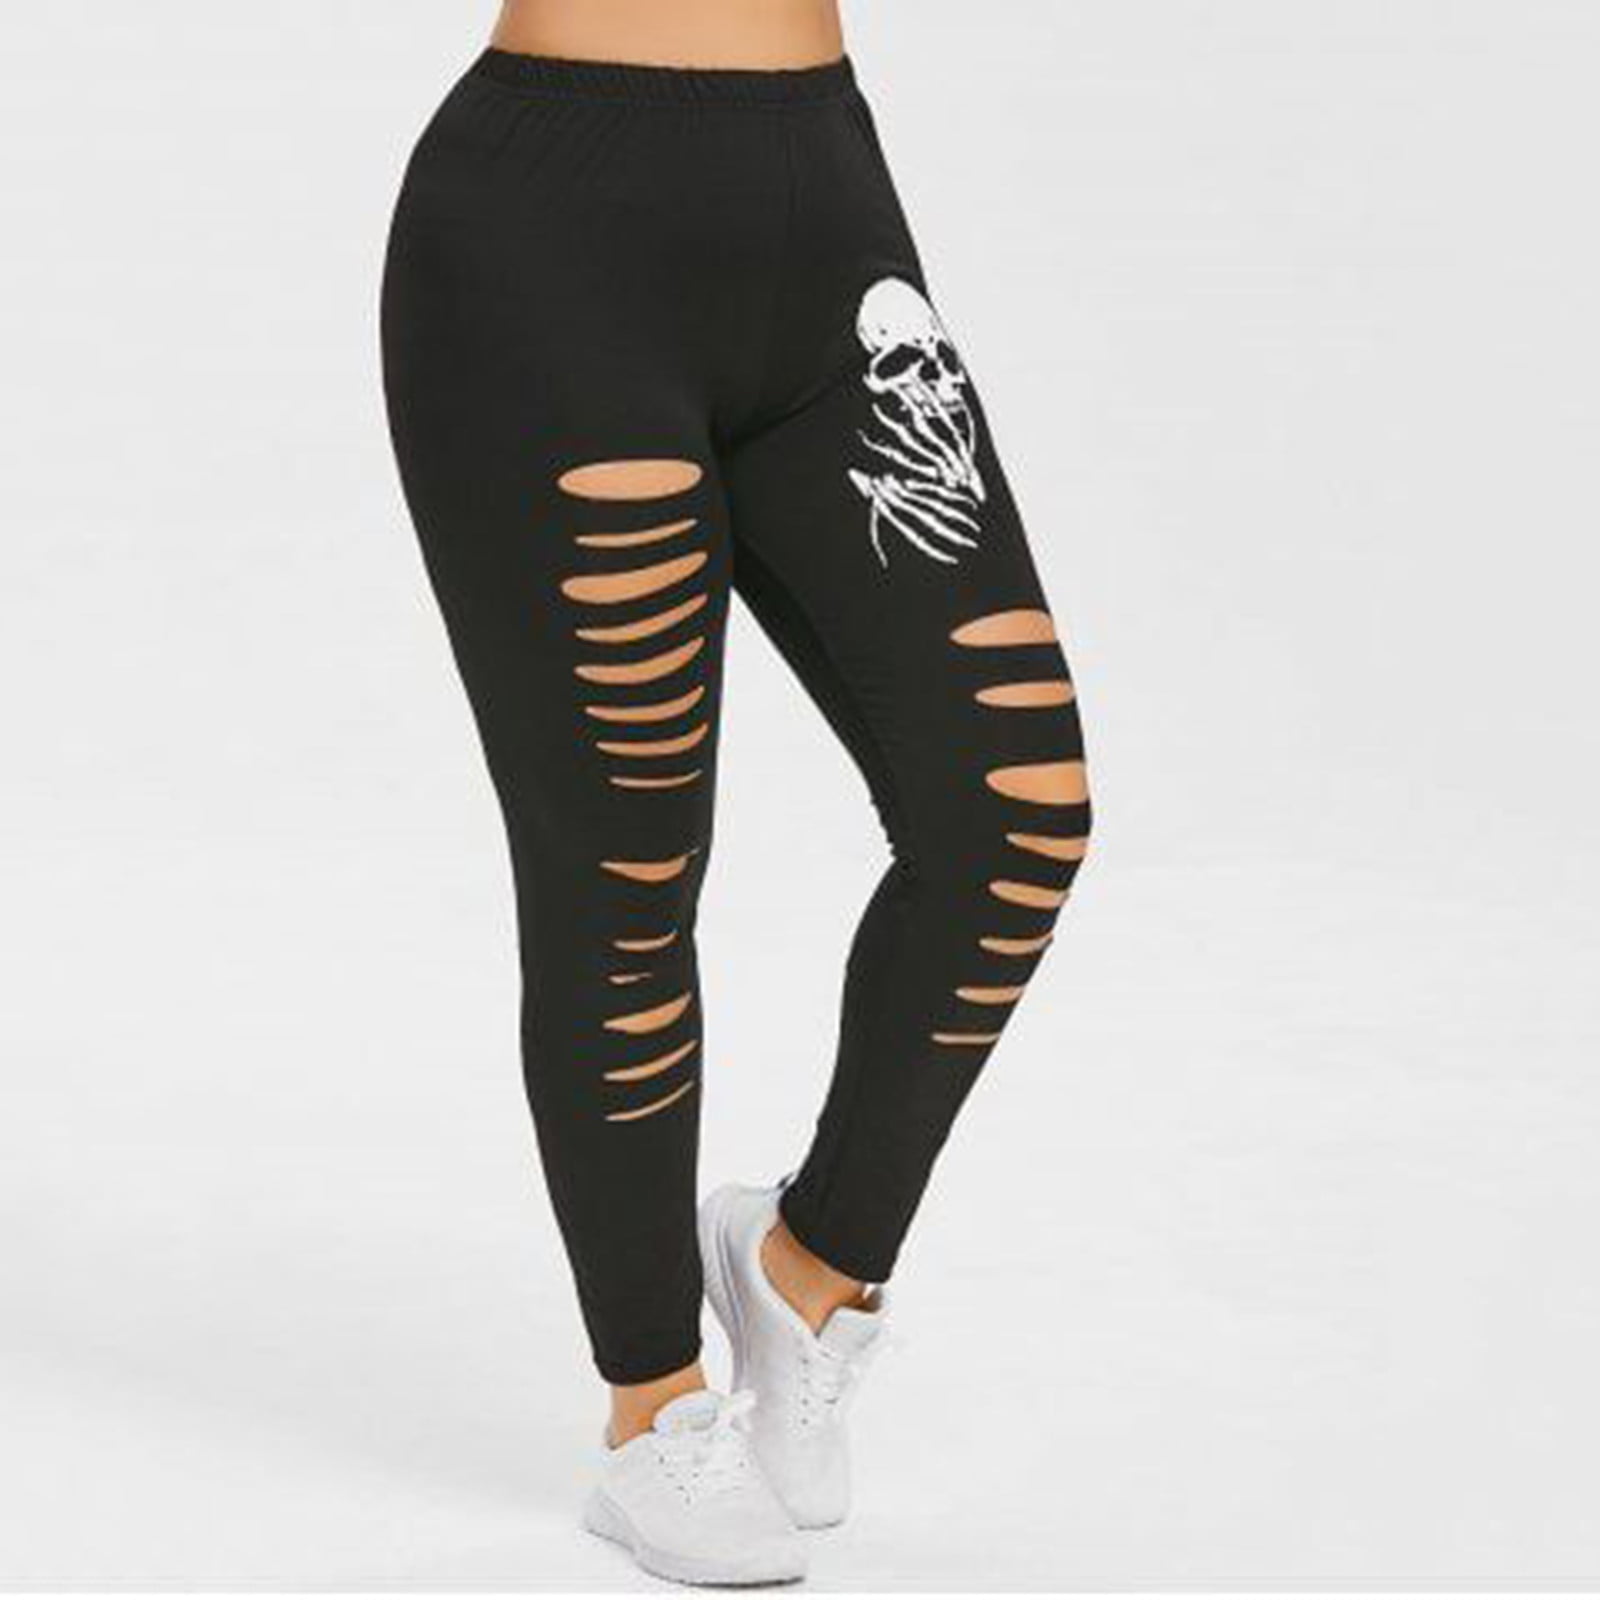 Fashion Horror Skull Pajamas Leggings Skeleton Flare Pants Skeleton Prints Pants 